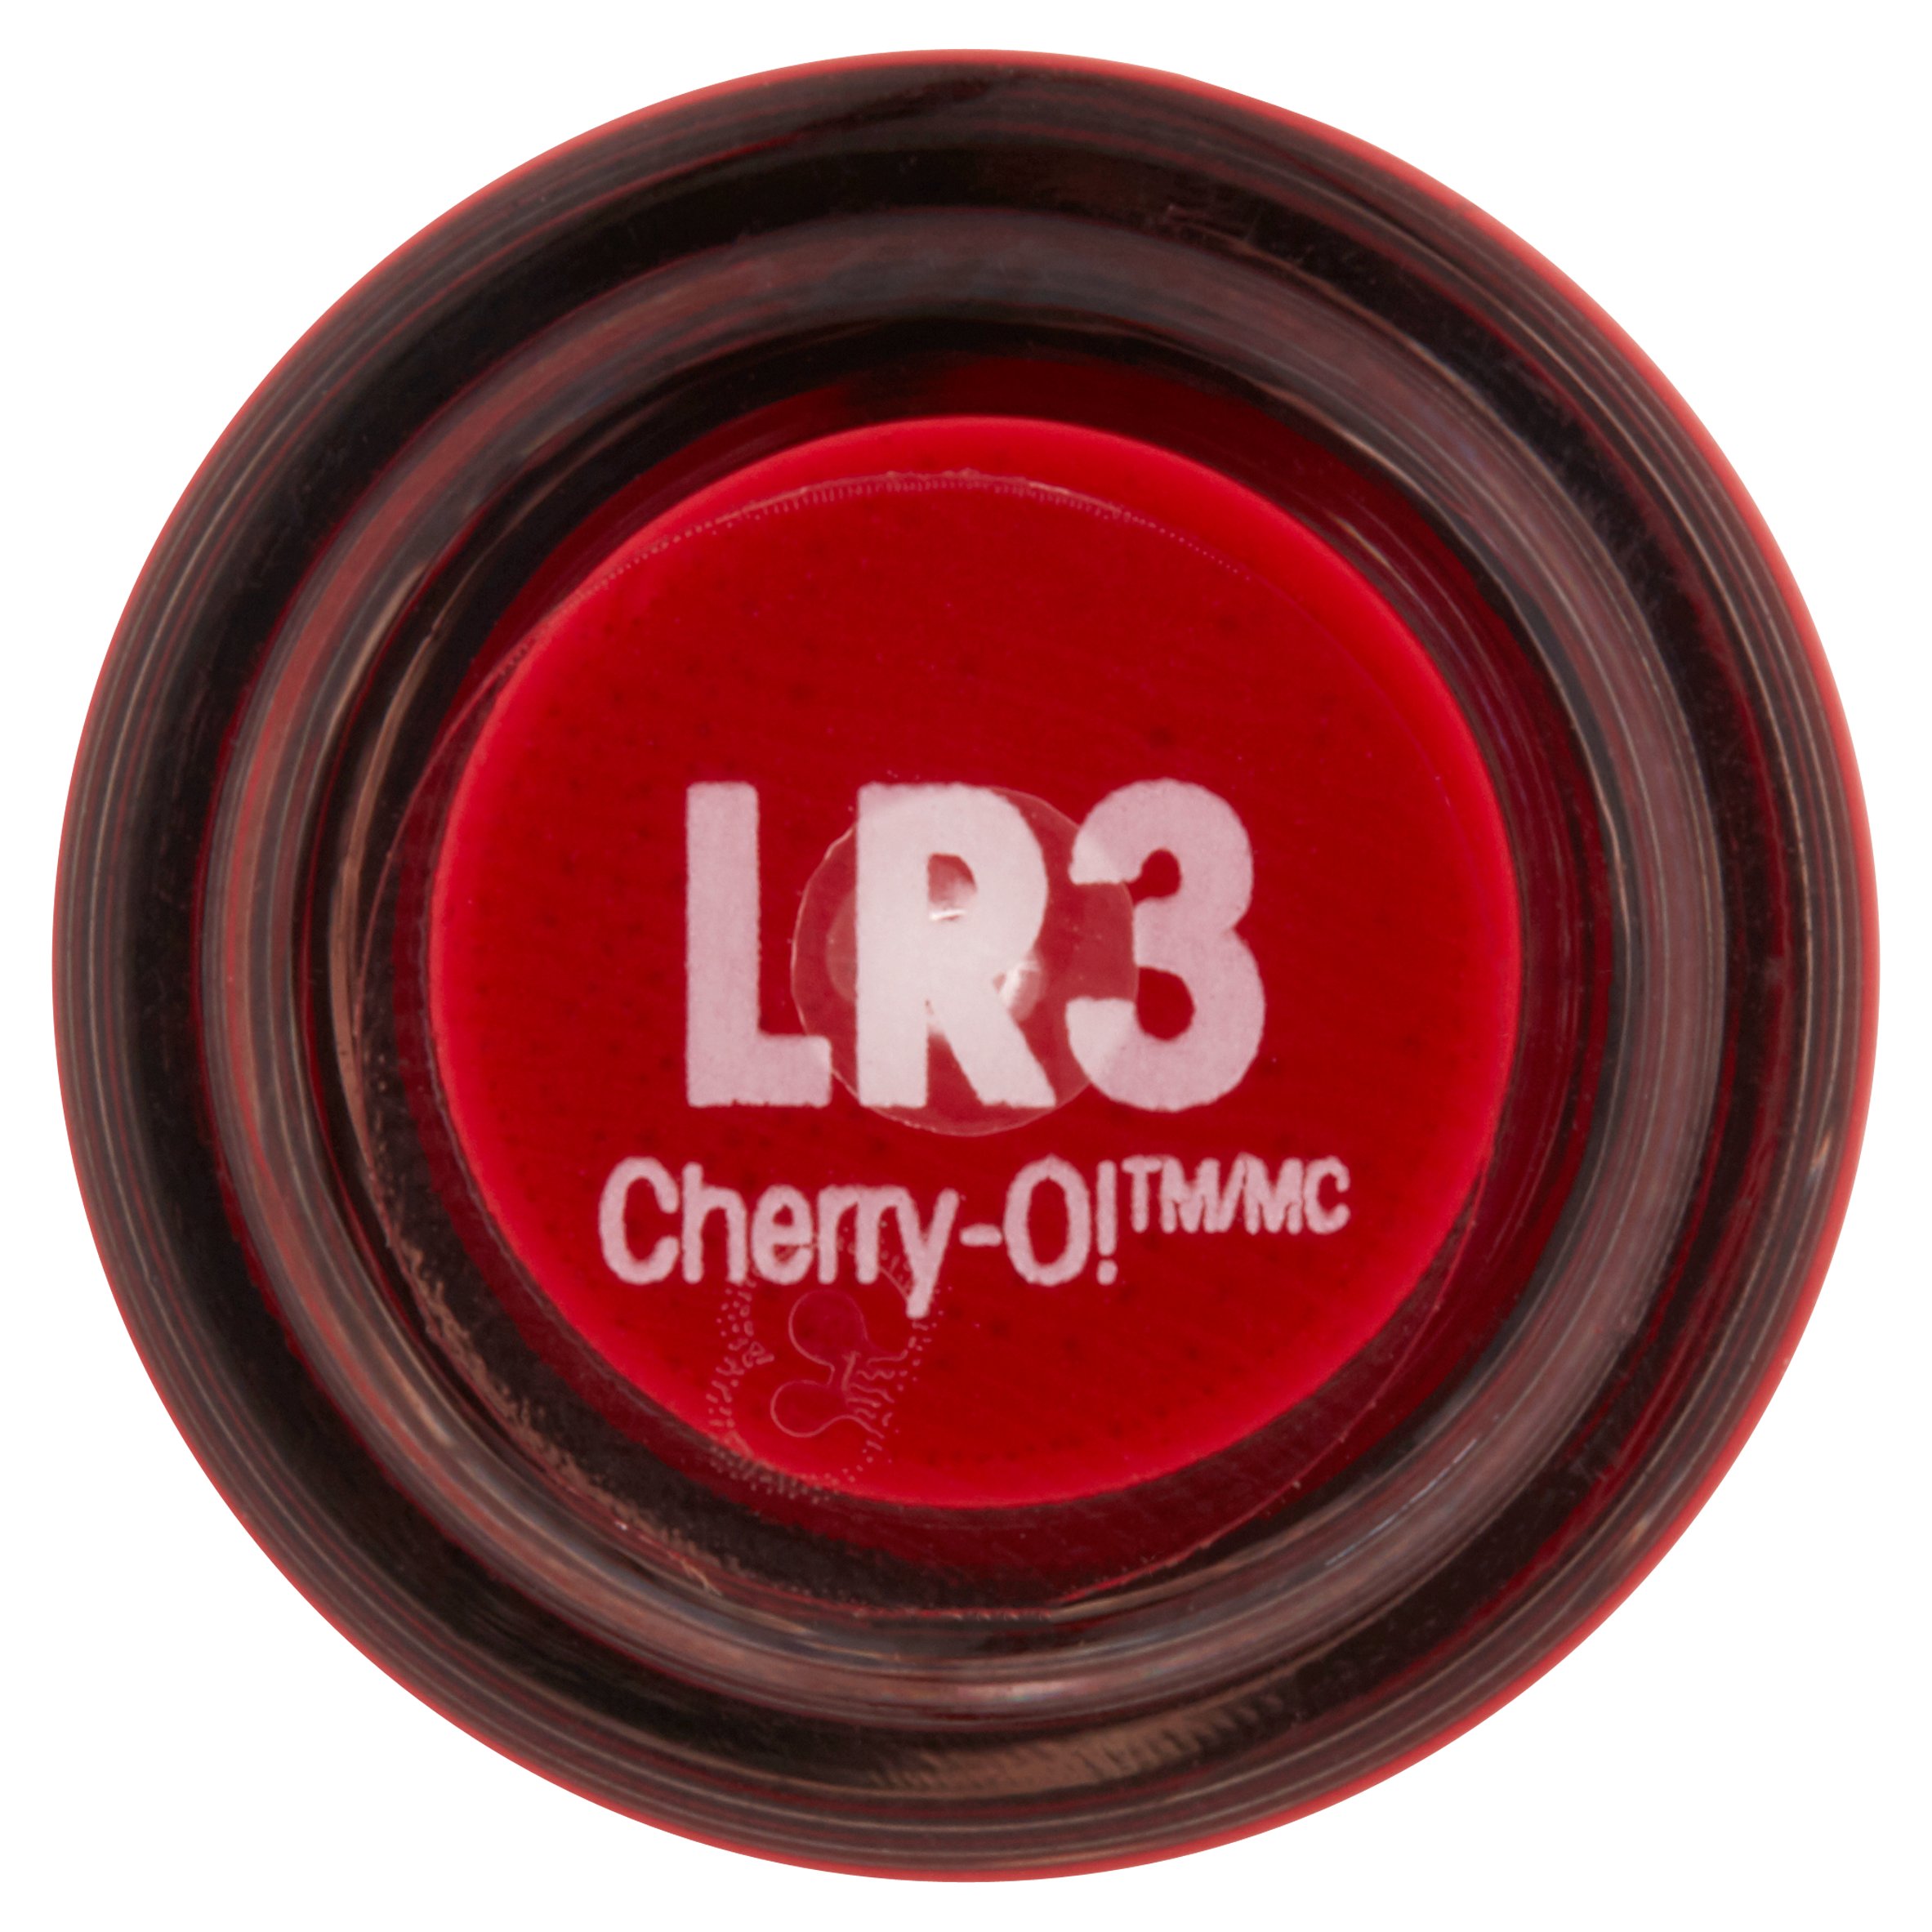 Flower Lip Radiance LR3 Cherry-O! High Shine Lip Lacquer, 0.18 oz - image 4 of 4